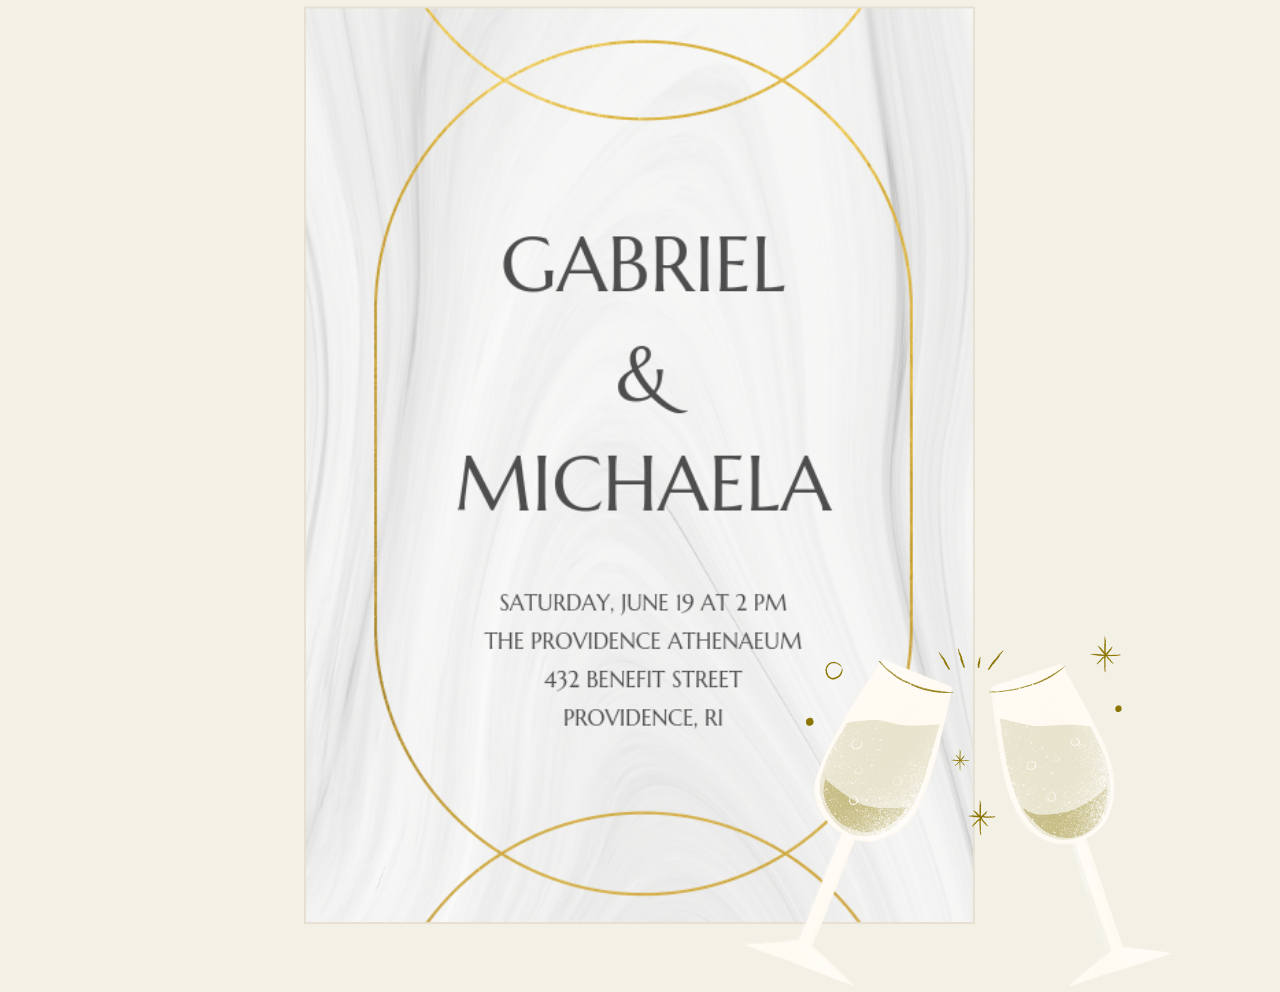 Wedding Invitation image